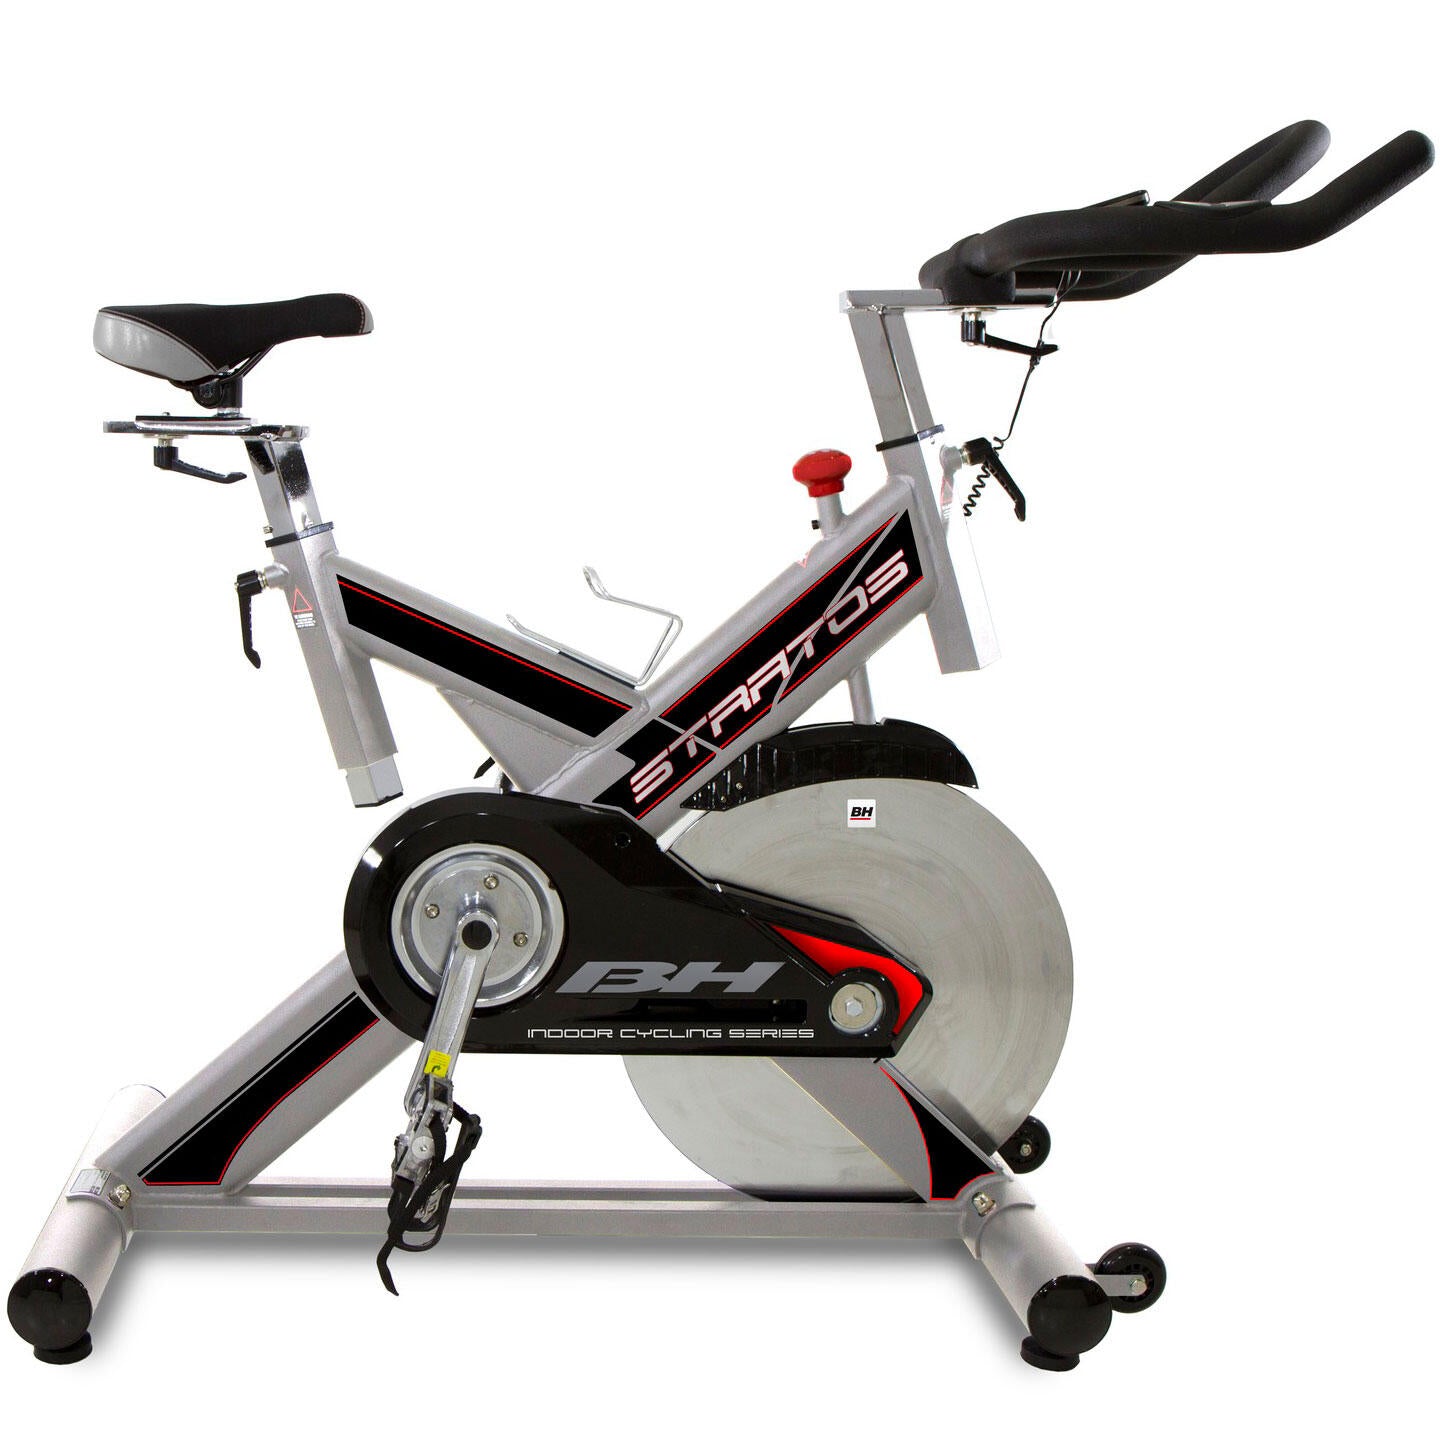 BH Fitness Stratos exercise bike